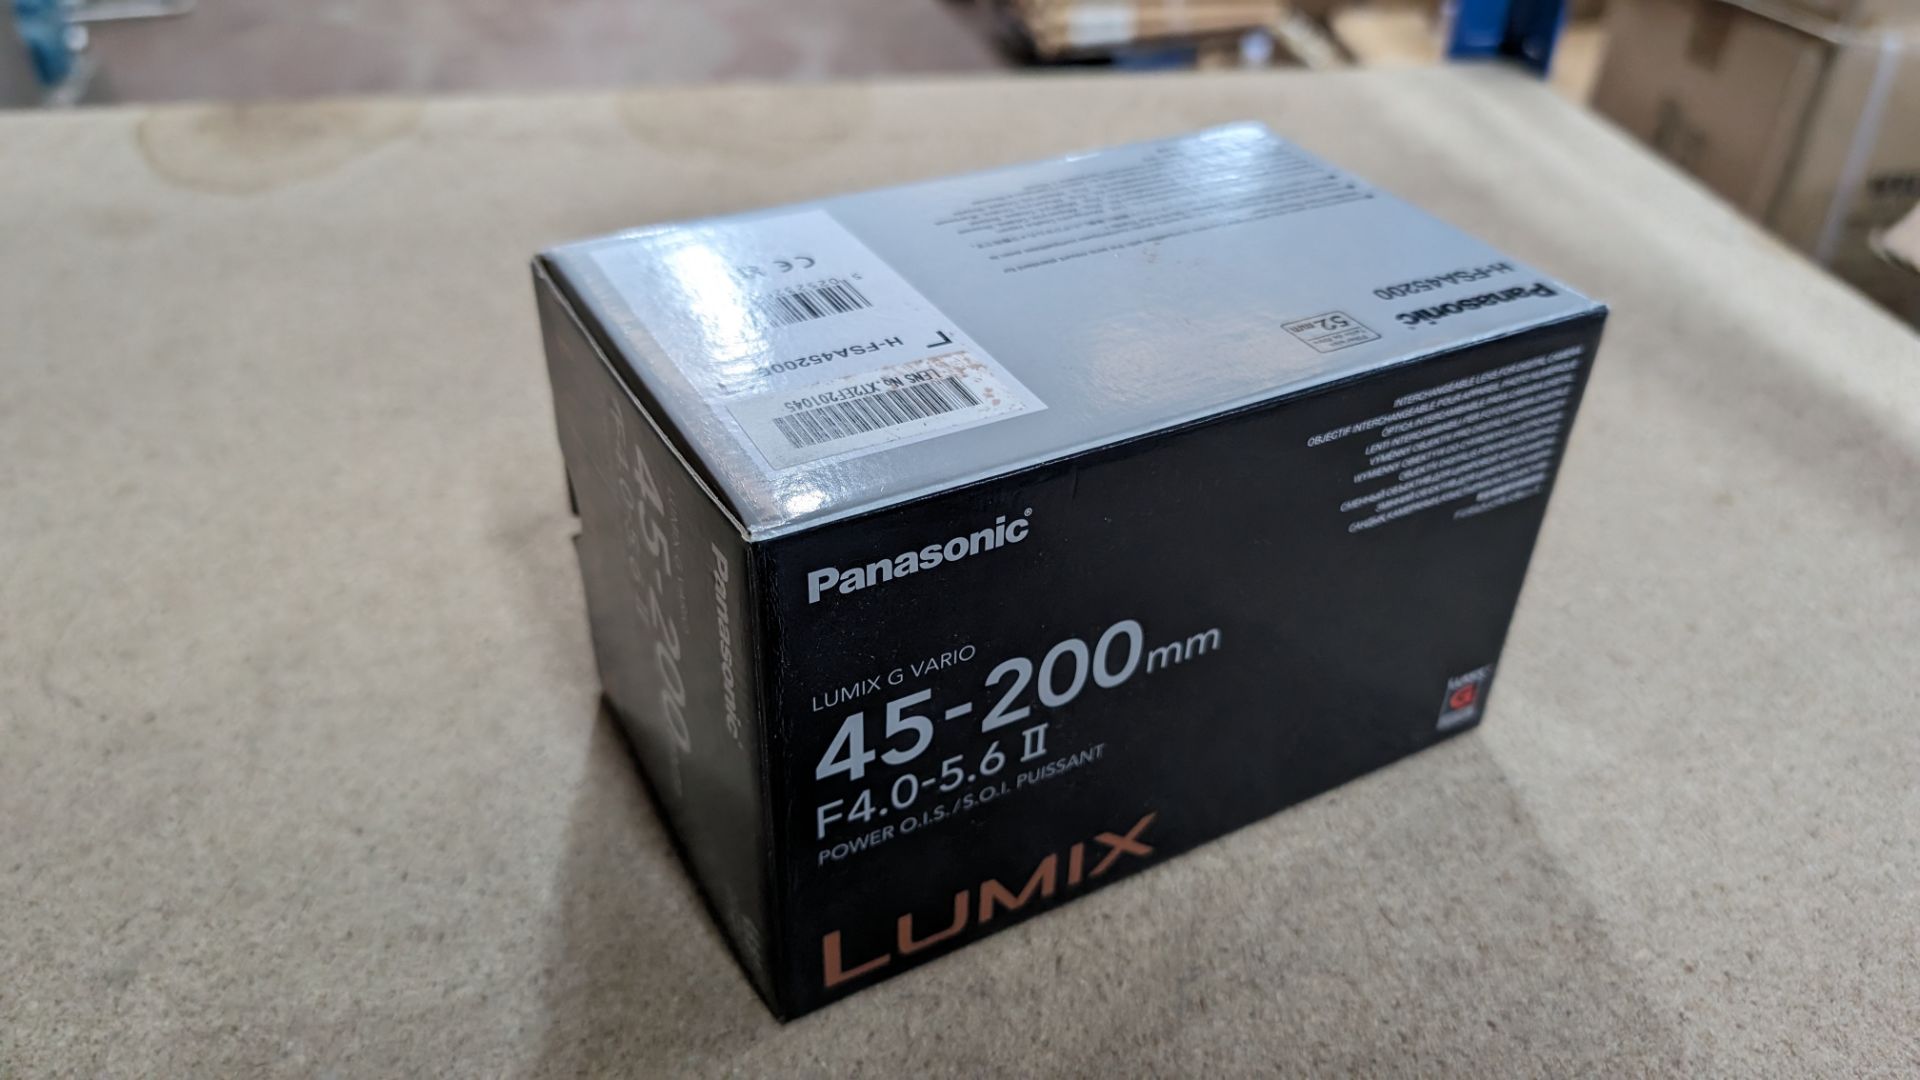 Panasonic Lumix G Vario 45-200mm lens, model H-FSA45200, f4.0-5.6 II - Bild 3 aus 5